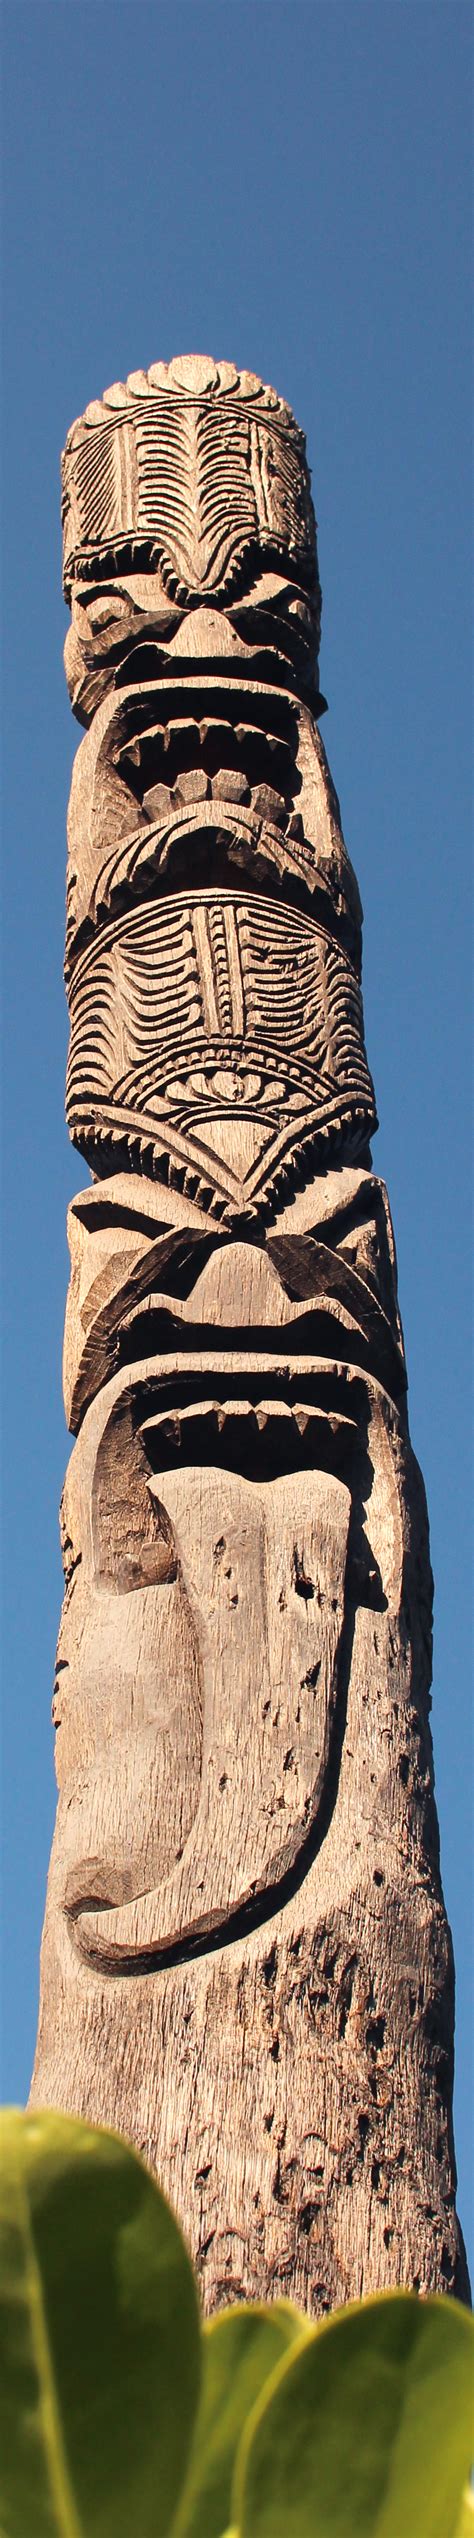 Totem Pole Wikipedia The Free Encyclopedia Totem Pole Tiki Totem